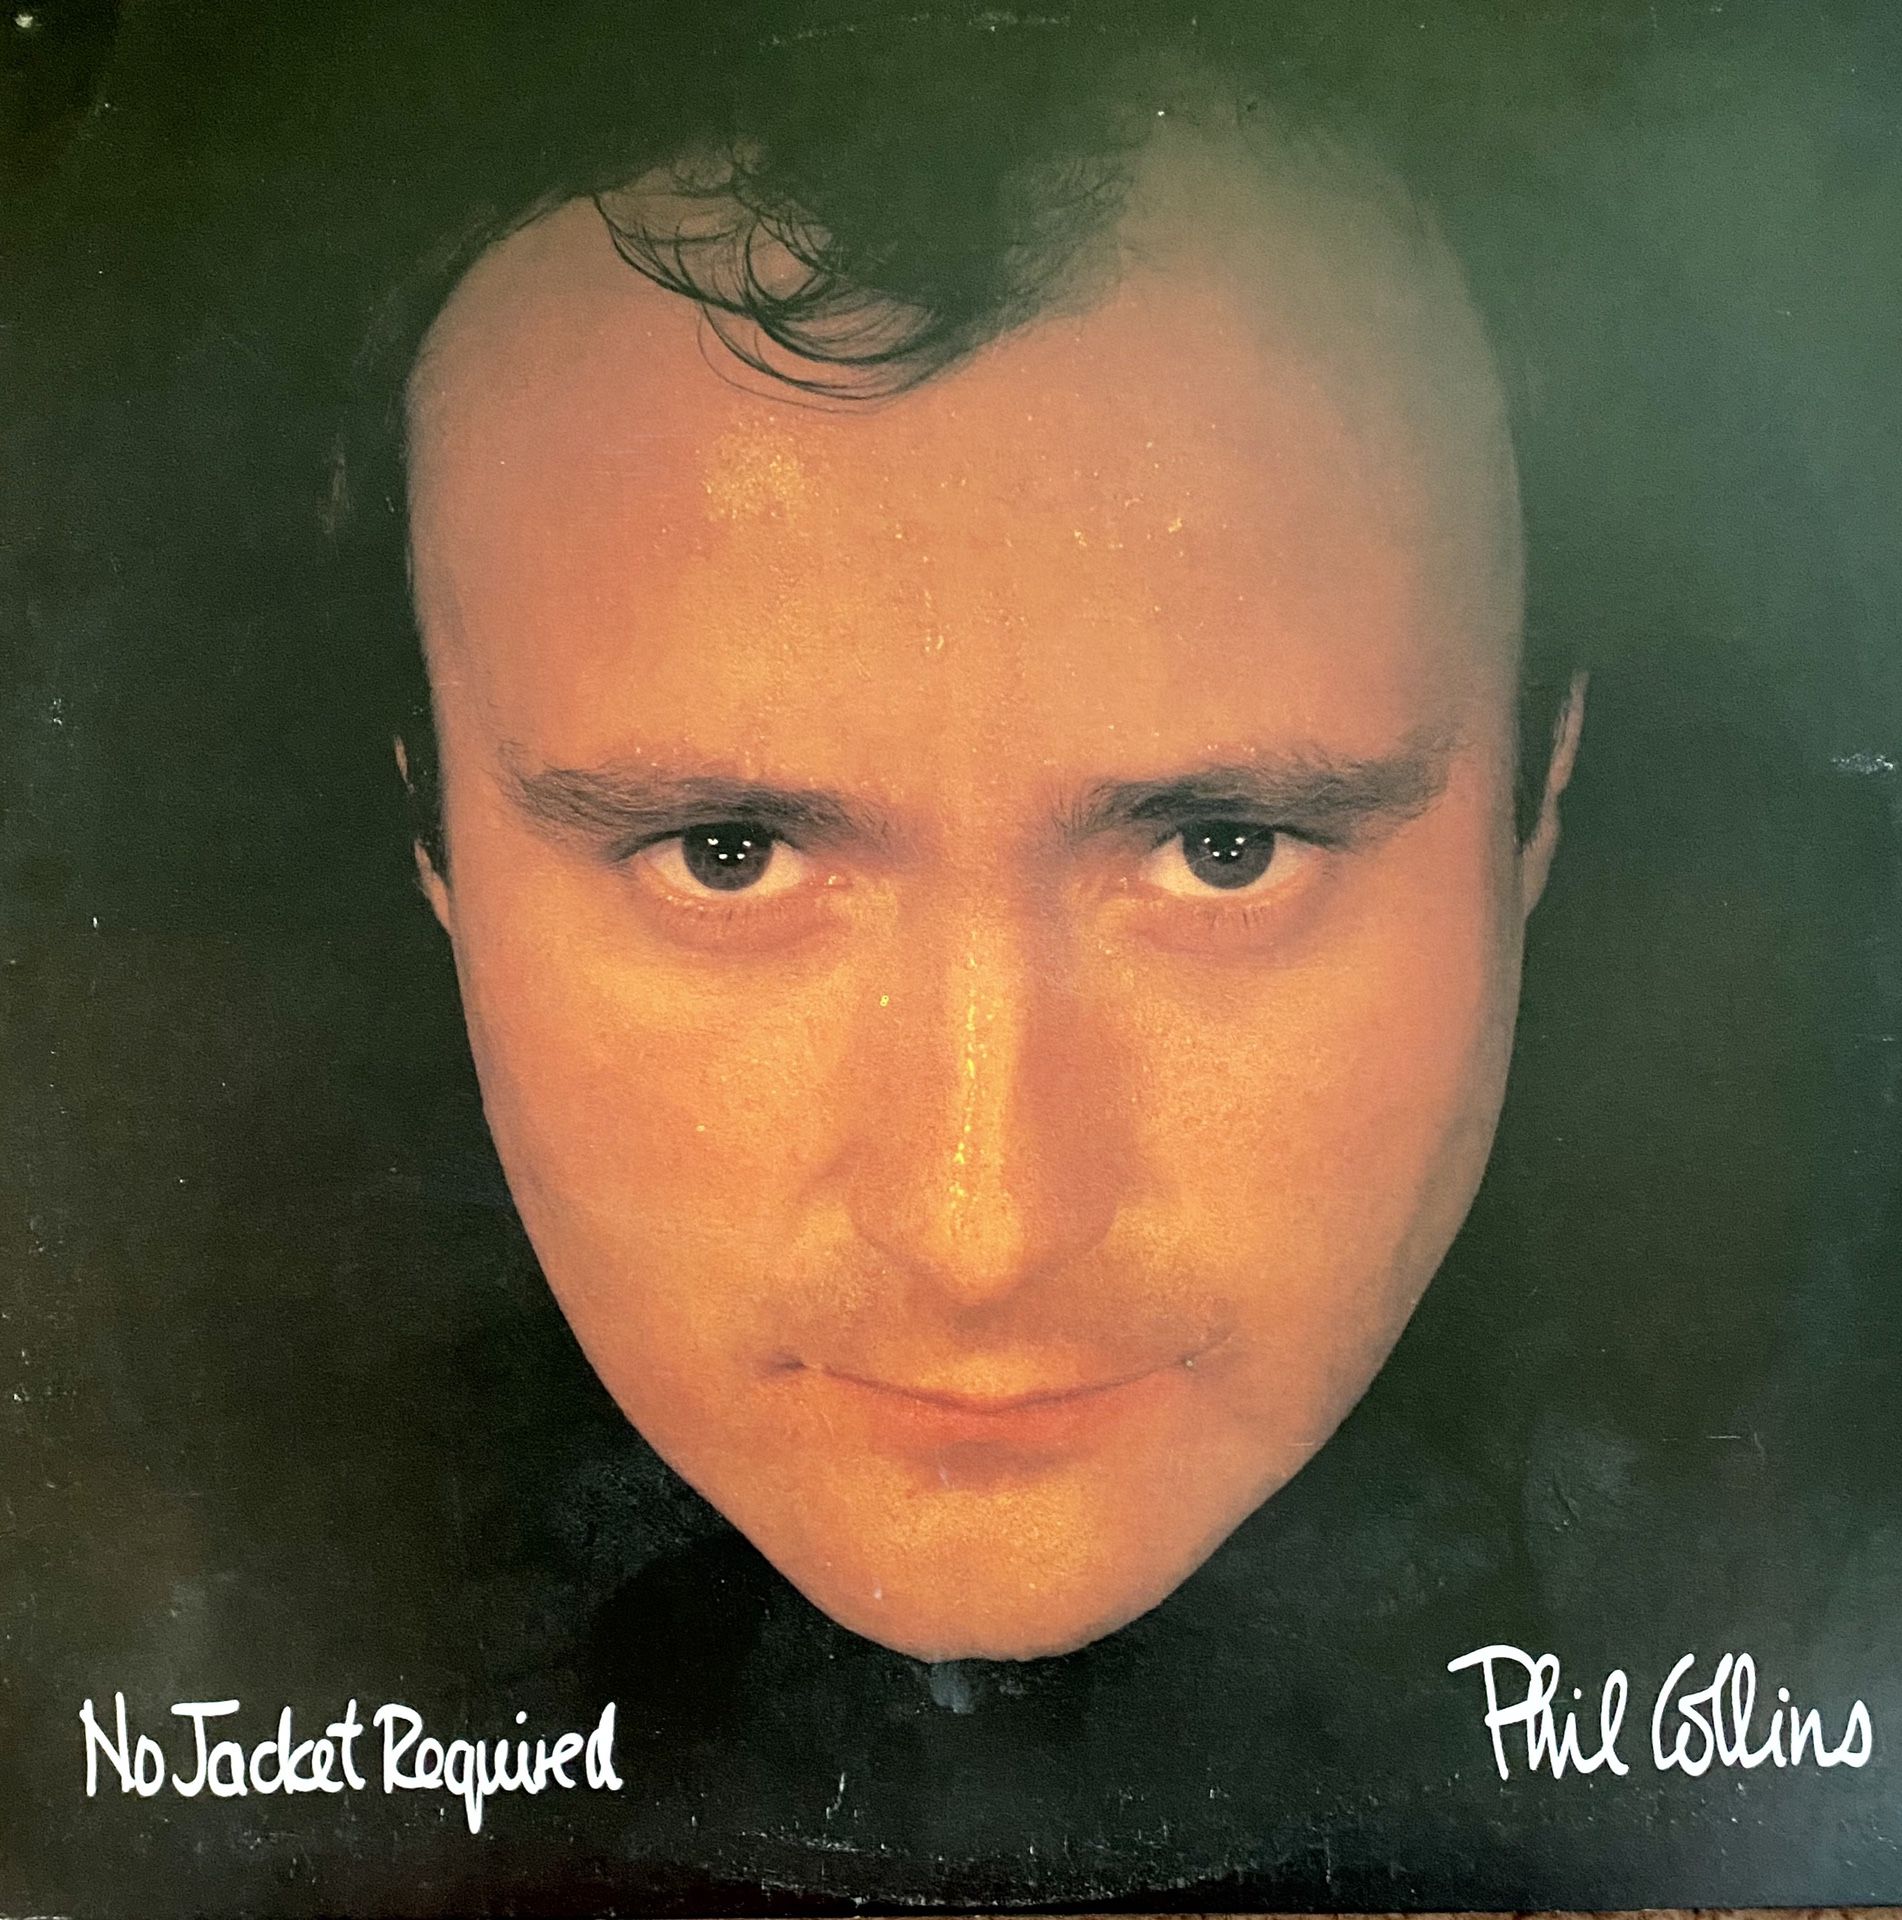 Phil Collins “No Jacket Required” Vinyl Album $11